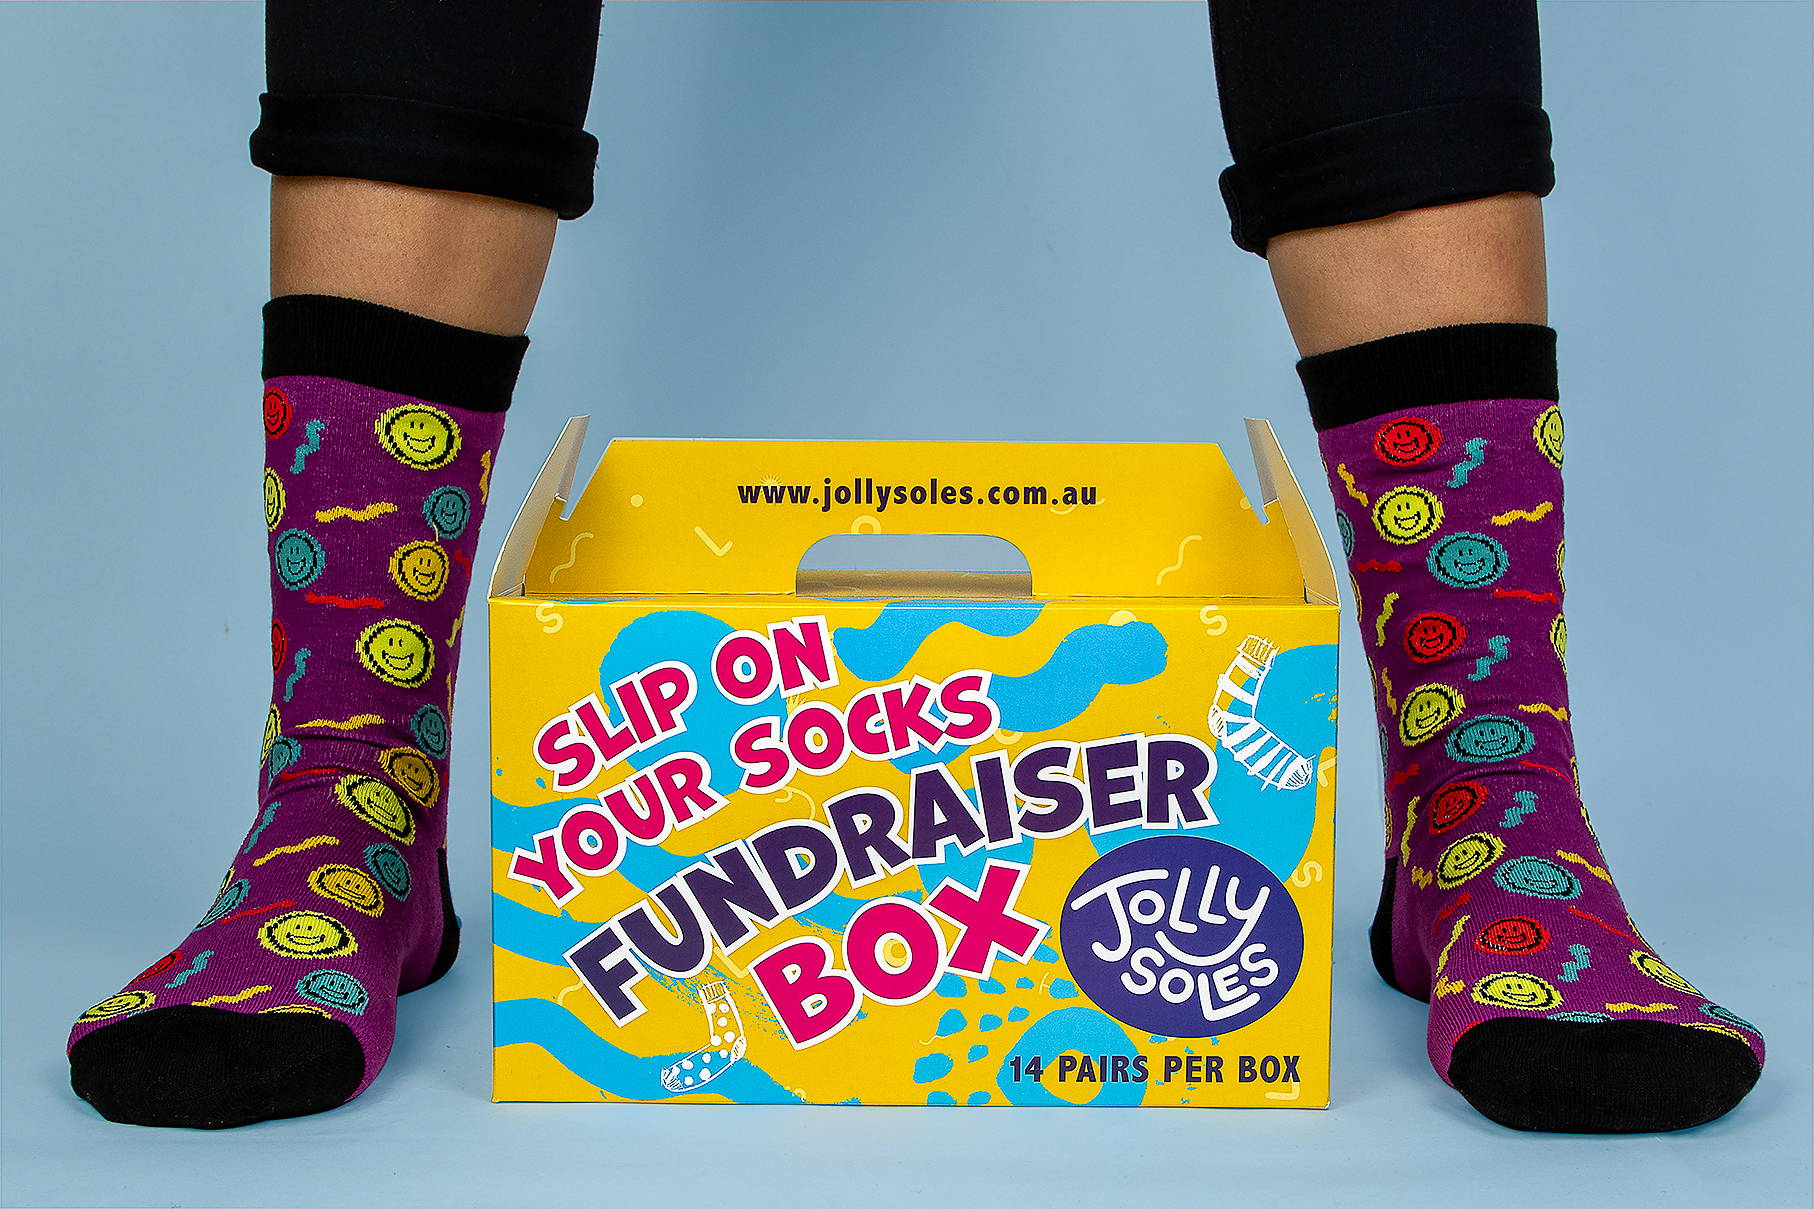 Jolly Soles Fundraiser Sock Box Yellow Box and Purple Smiley Face Socks